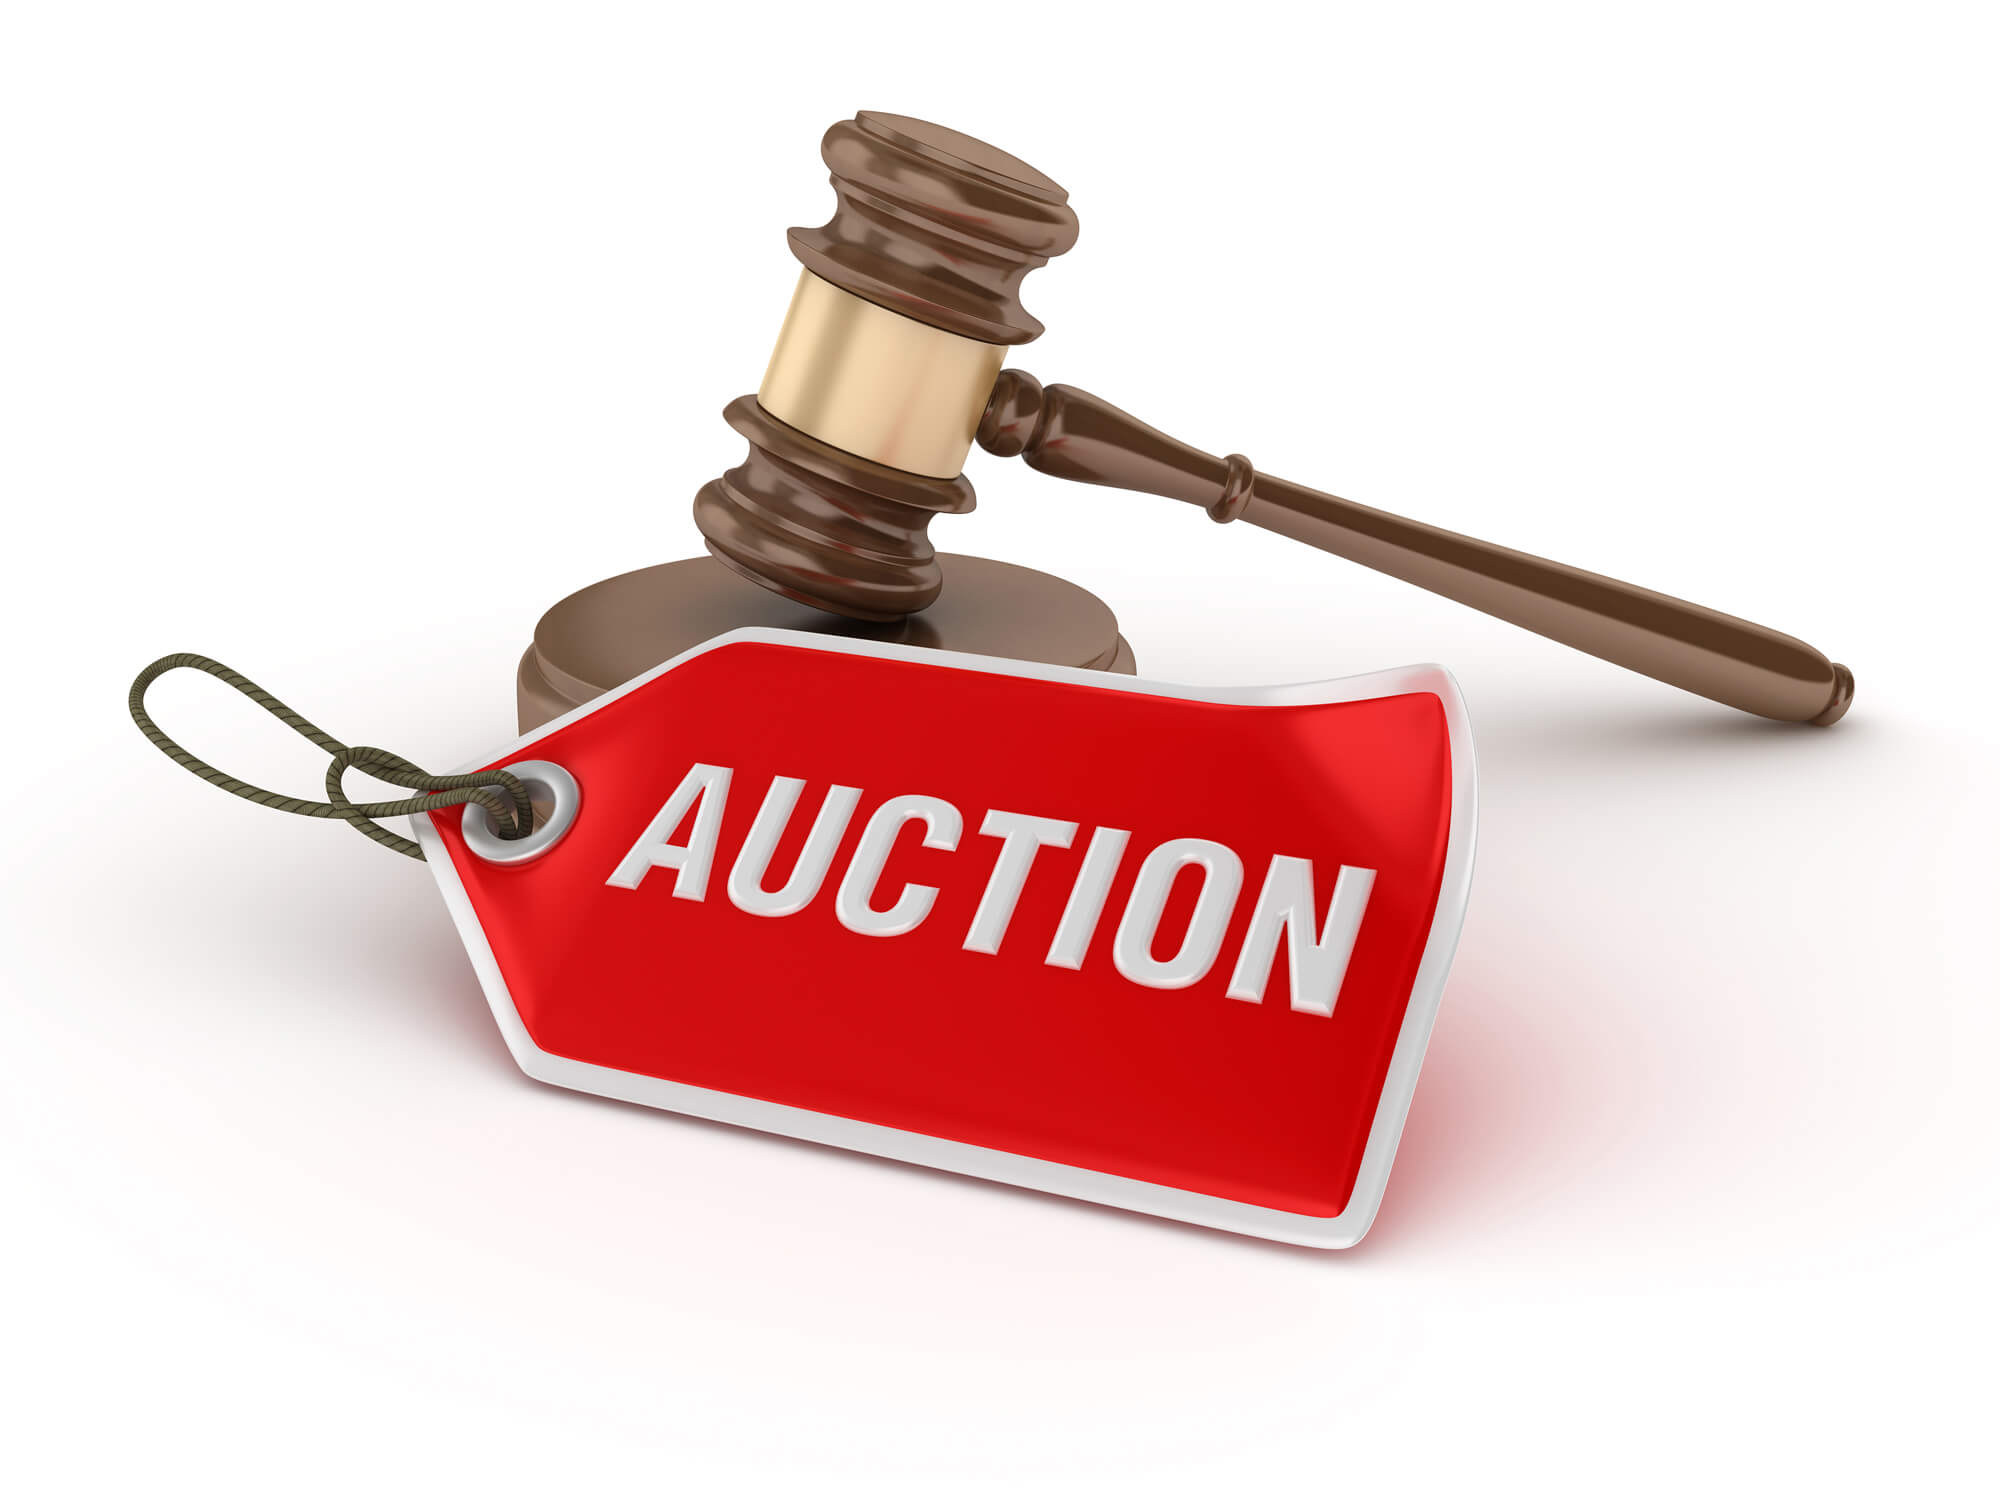 Auction Preview – Western Construction Auctions Inc.